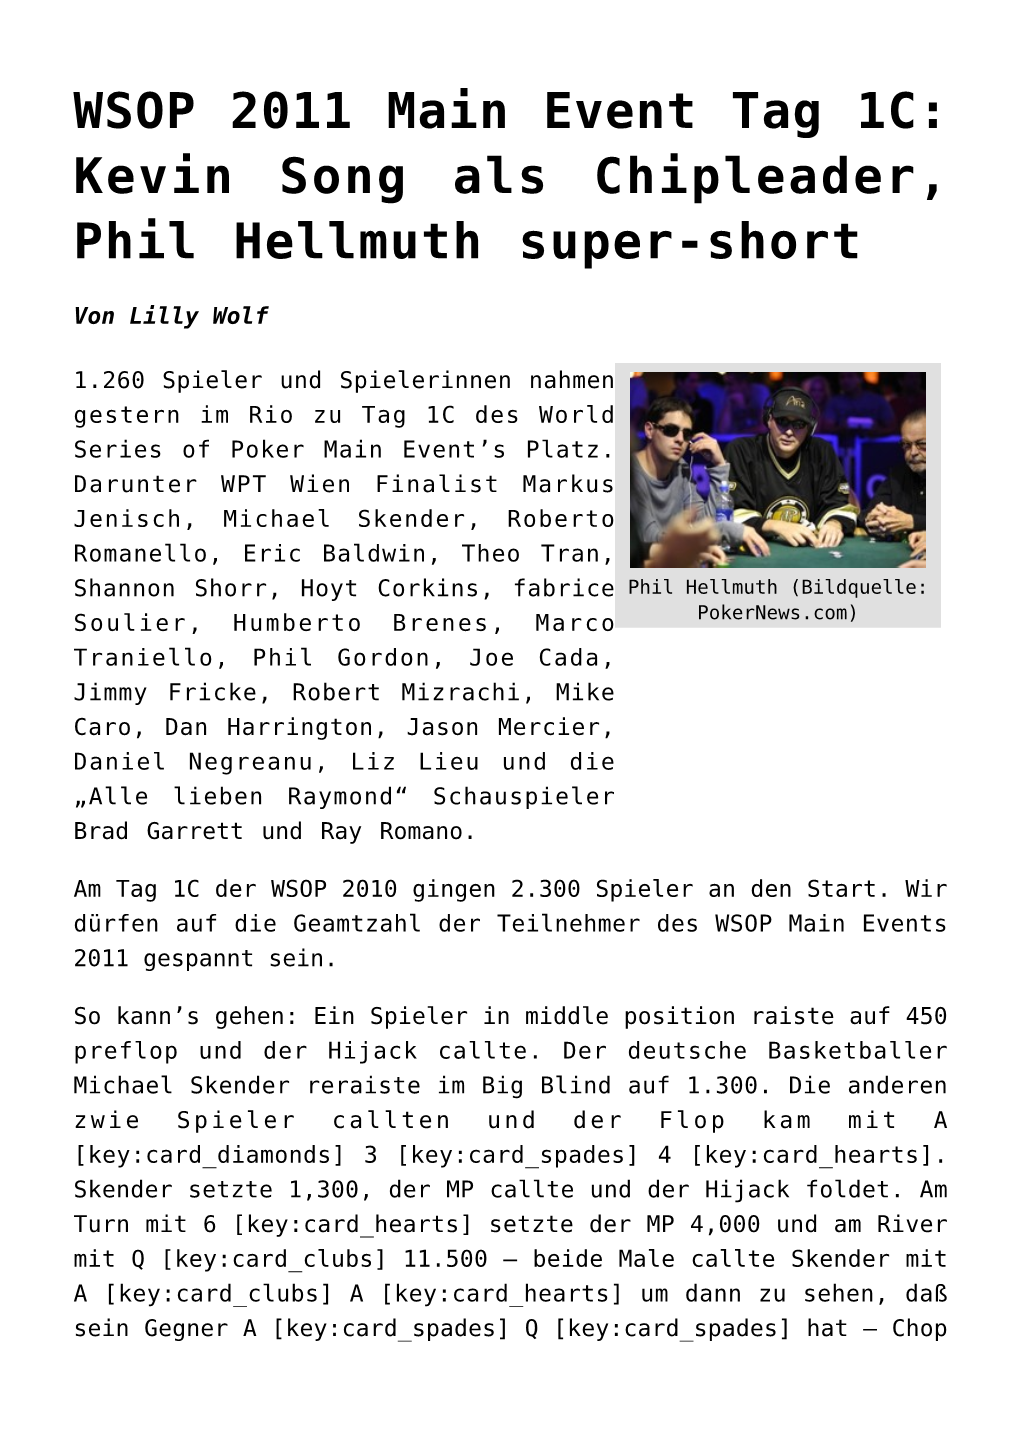 WSOP 2011 Main Event Tag 1C: Kevin Song Als Chipleader, Phil Hellmuth Super-Short